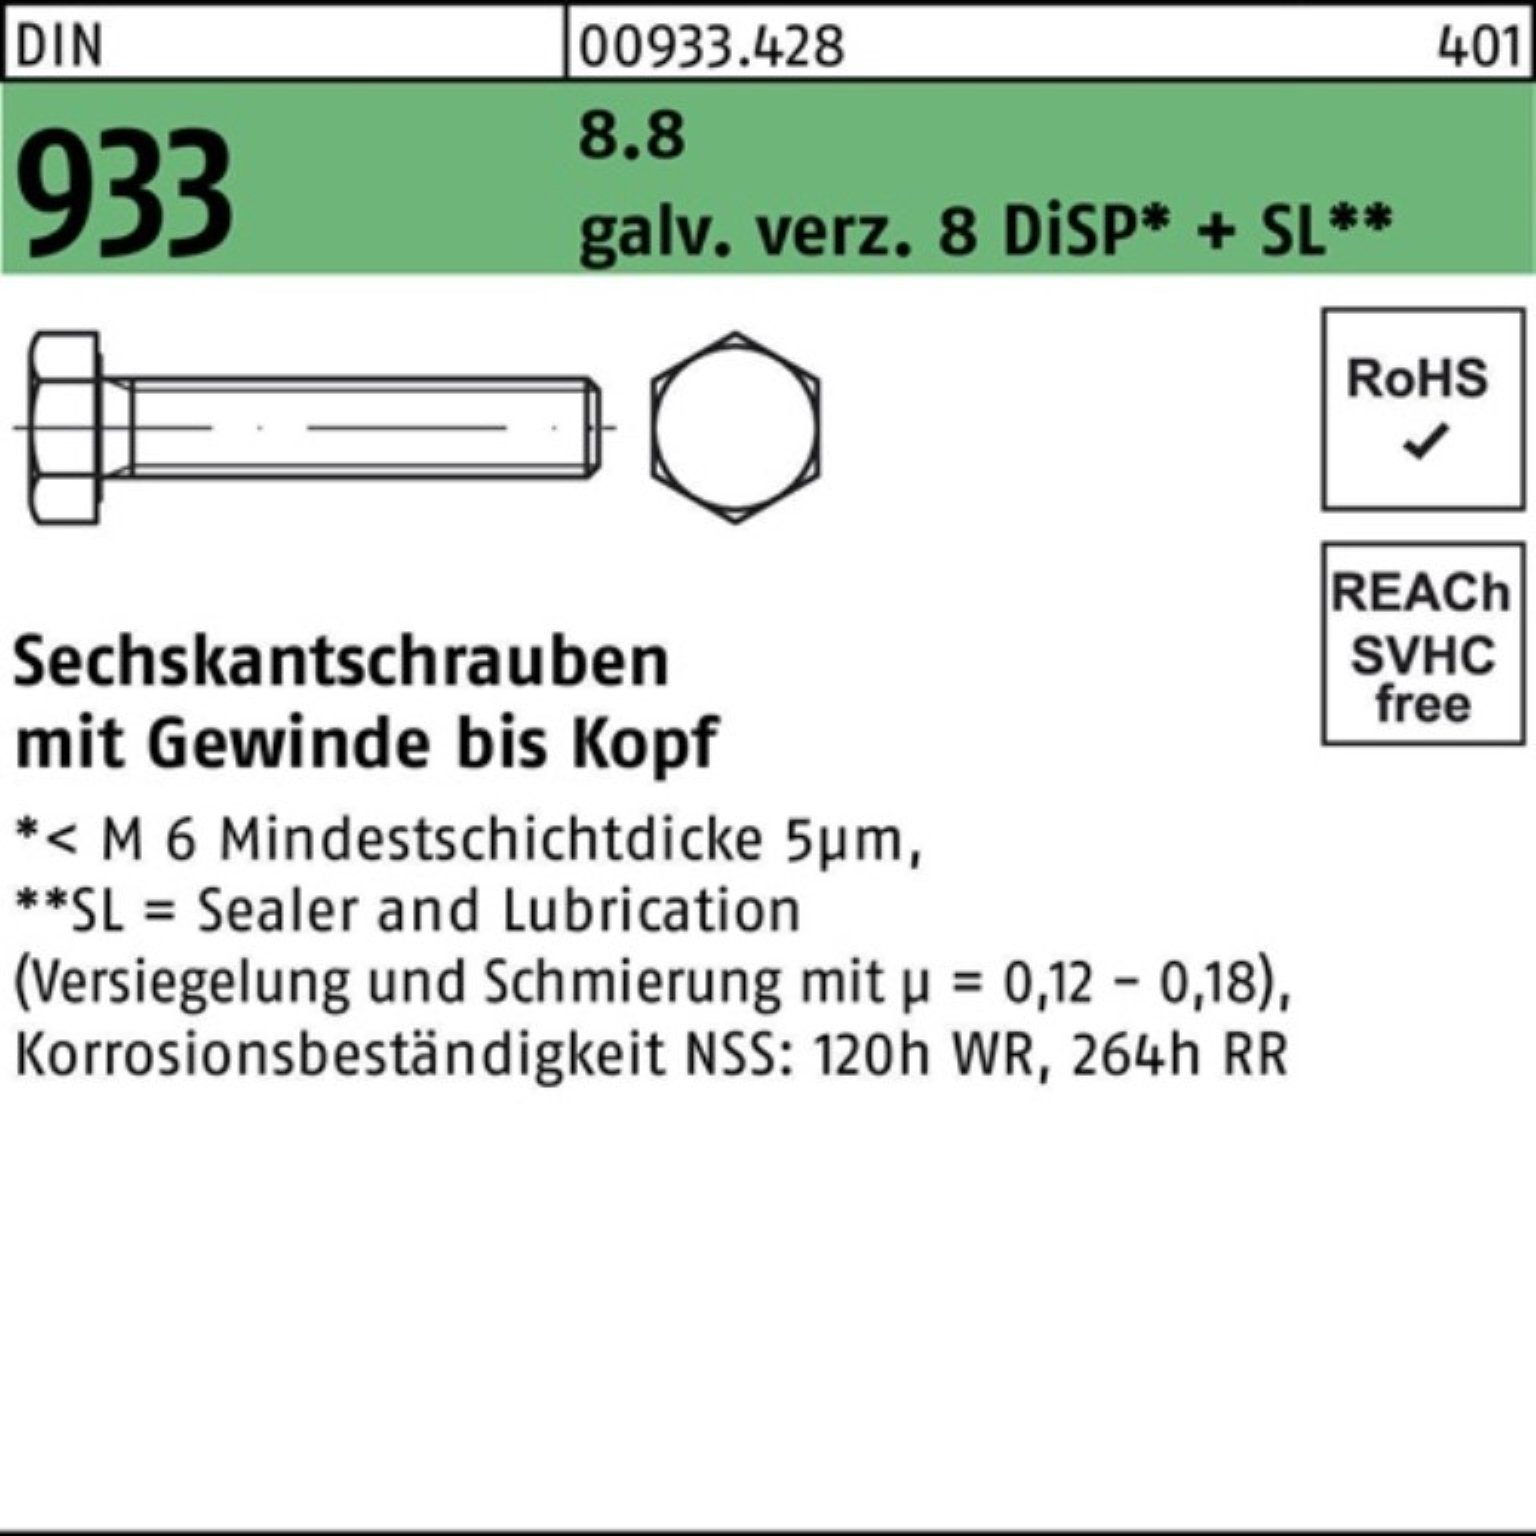 Sechskantschraube VG S Reyher gal + DIN 100er 8.8 110 8 Pack DiSP 933 Sechskantschraube Zn M16x